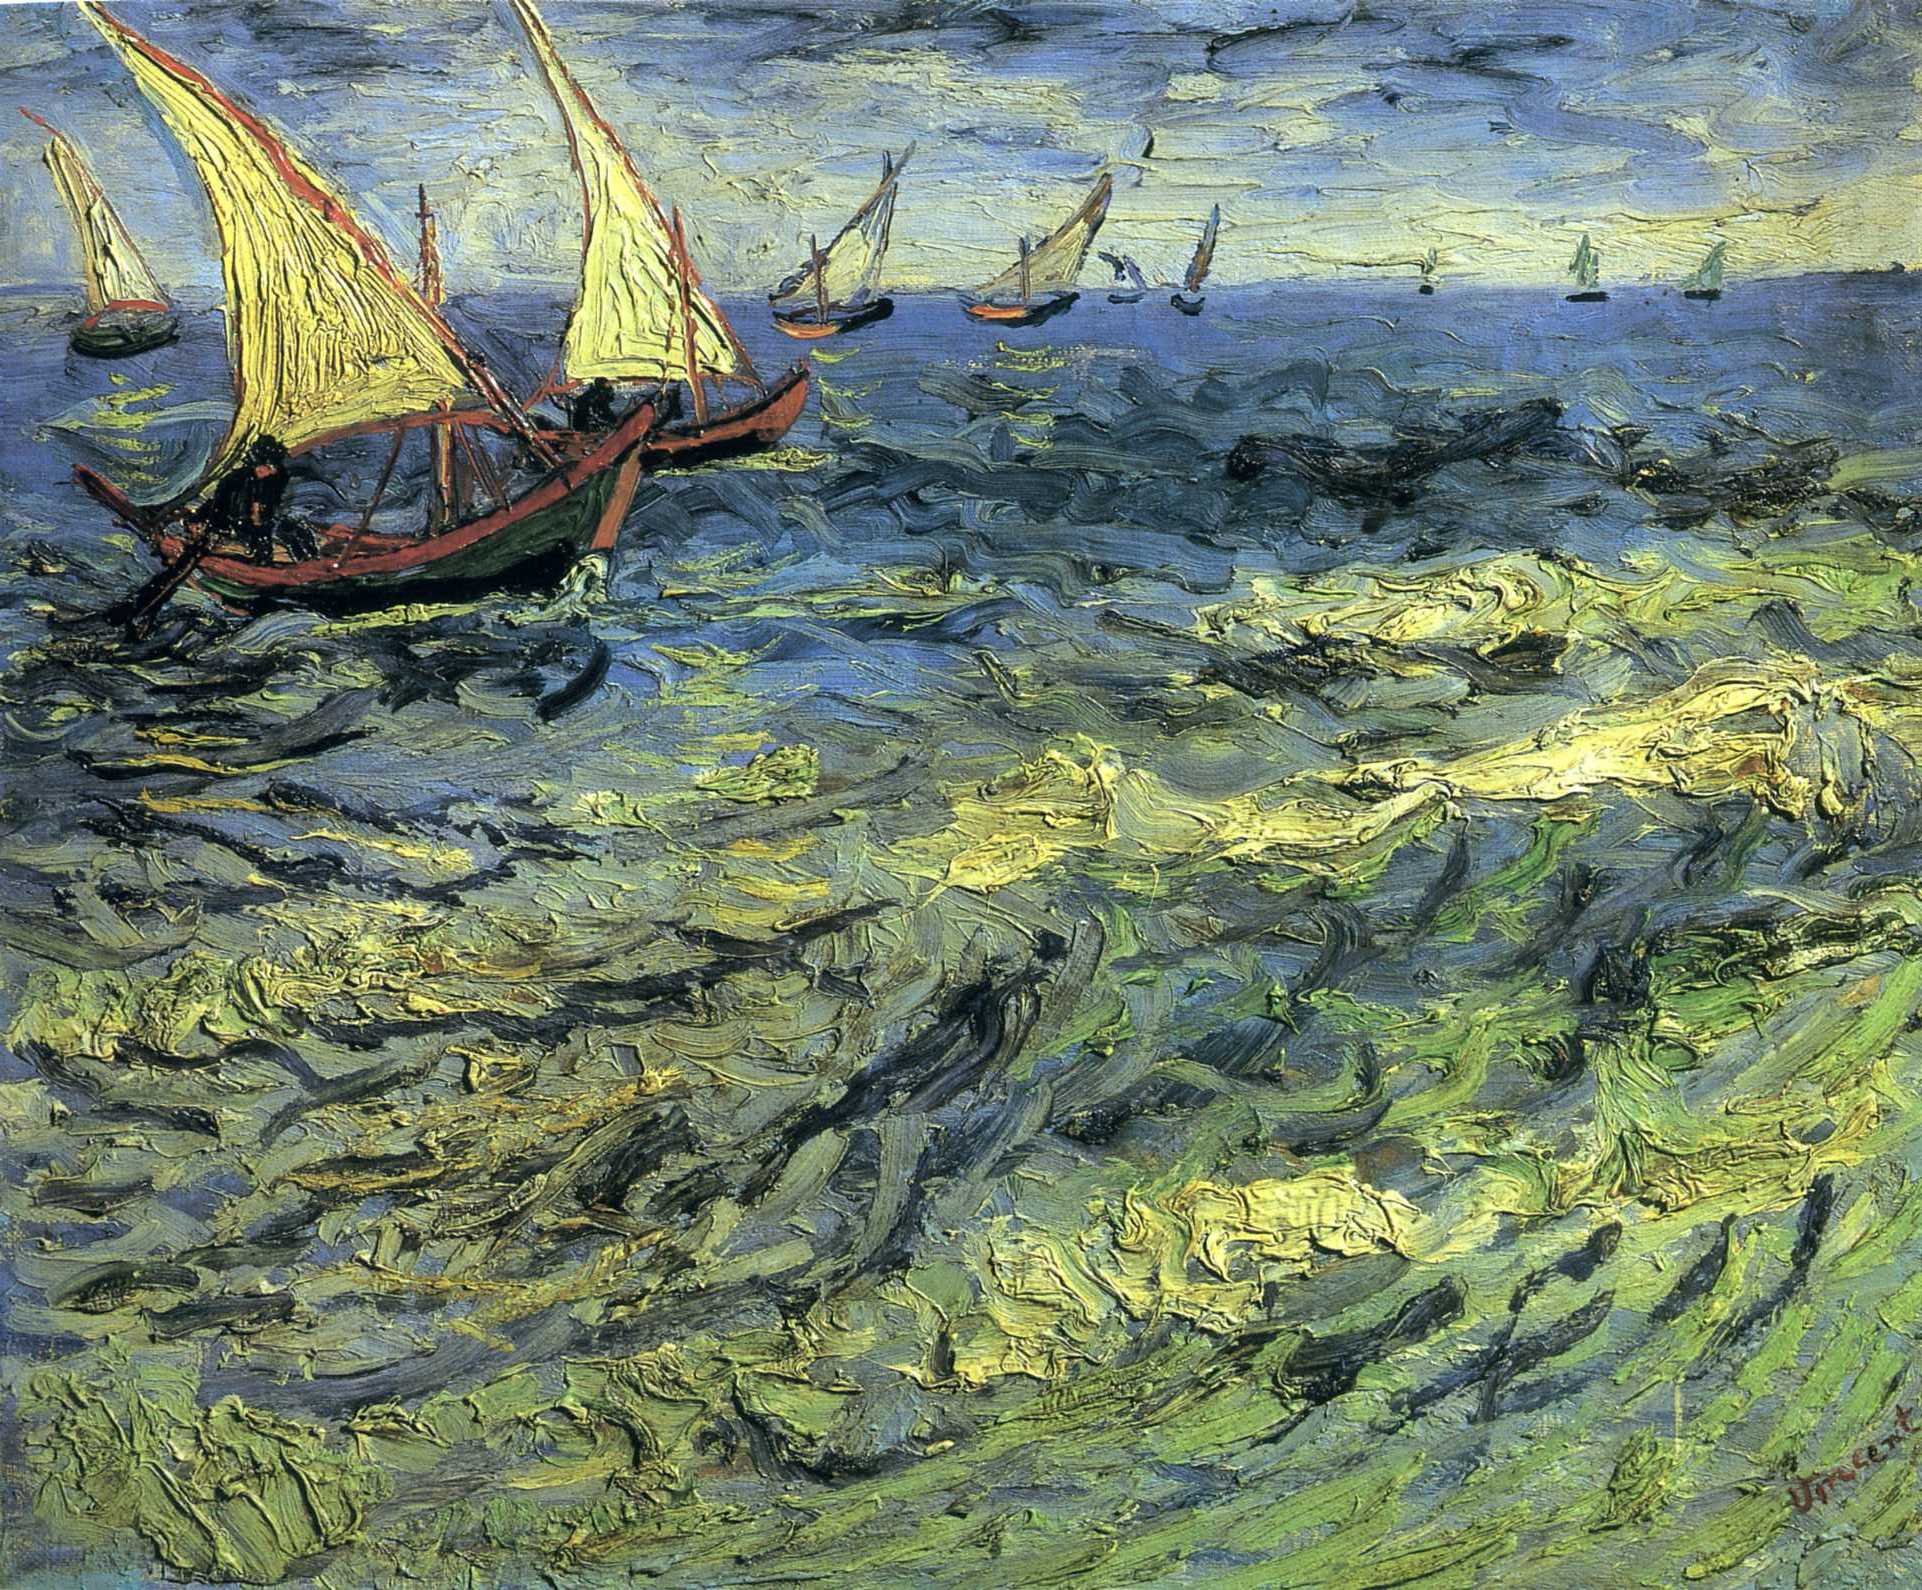 Łodzie Rybackie na Morzu by Vincent van Gogh - 1888 - 44 x 53 cm 